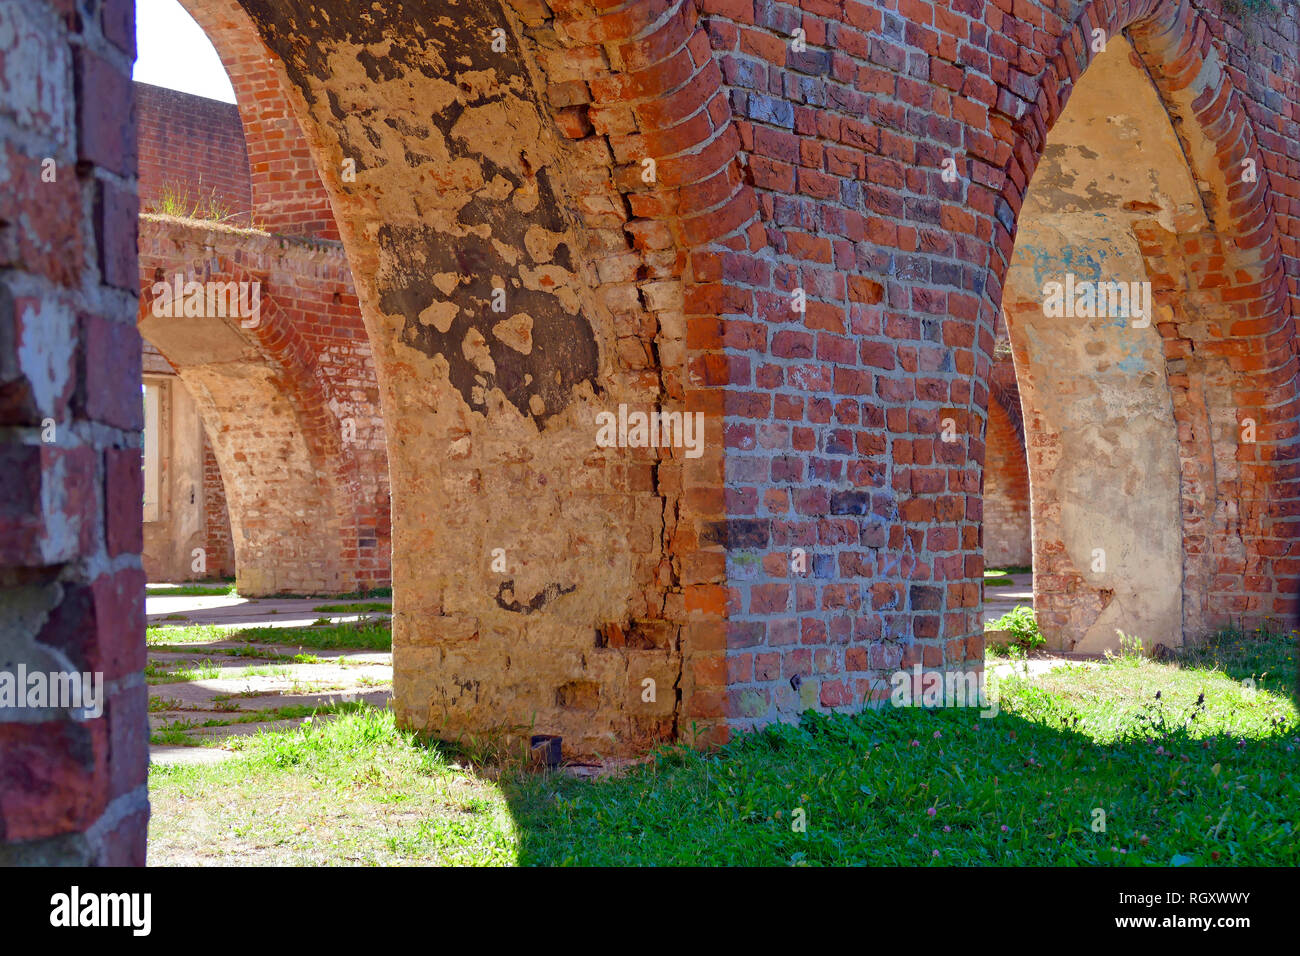 Ruine, monastère, Bad Doberan Landkreis Rostock, Allemagne, Europe Banque D'Images